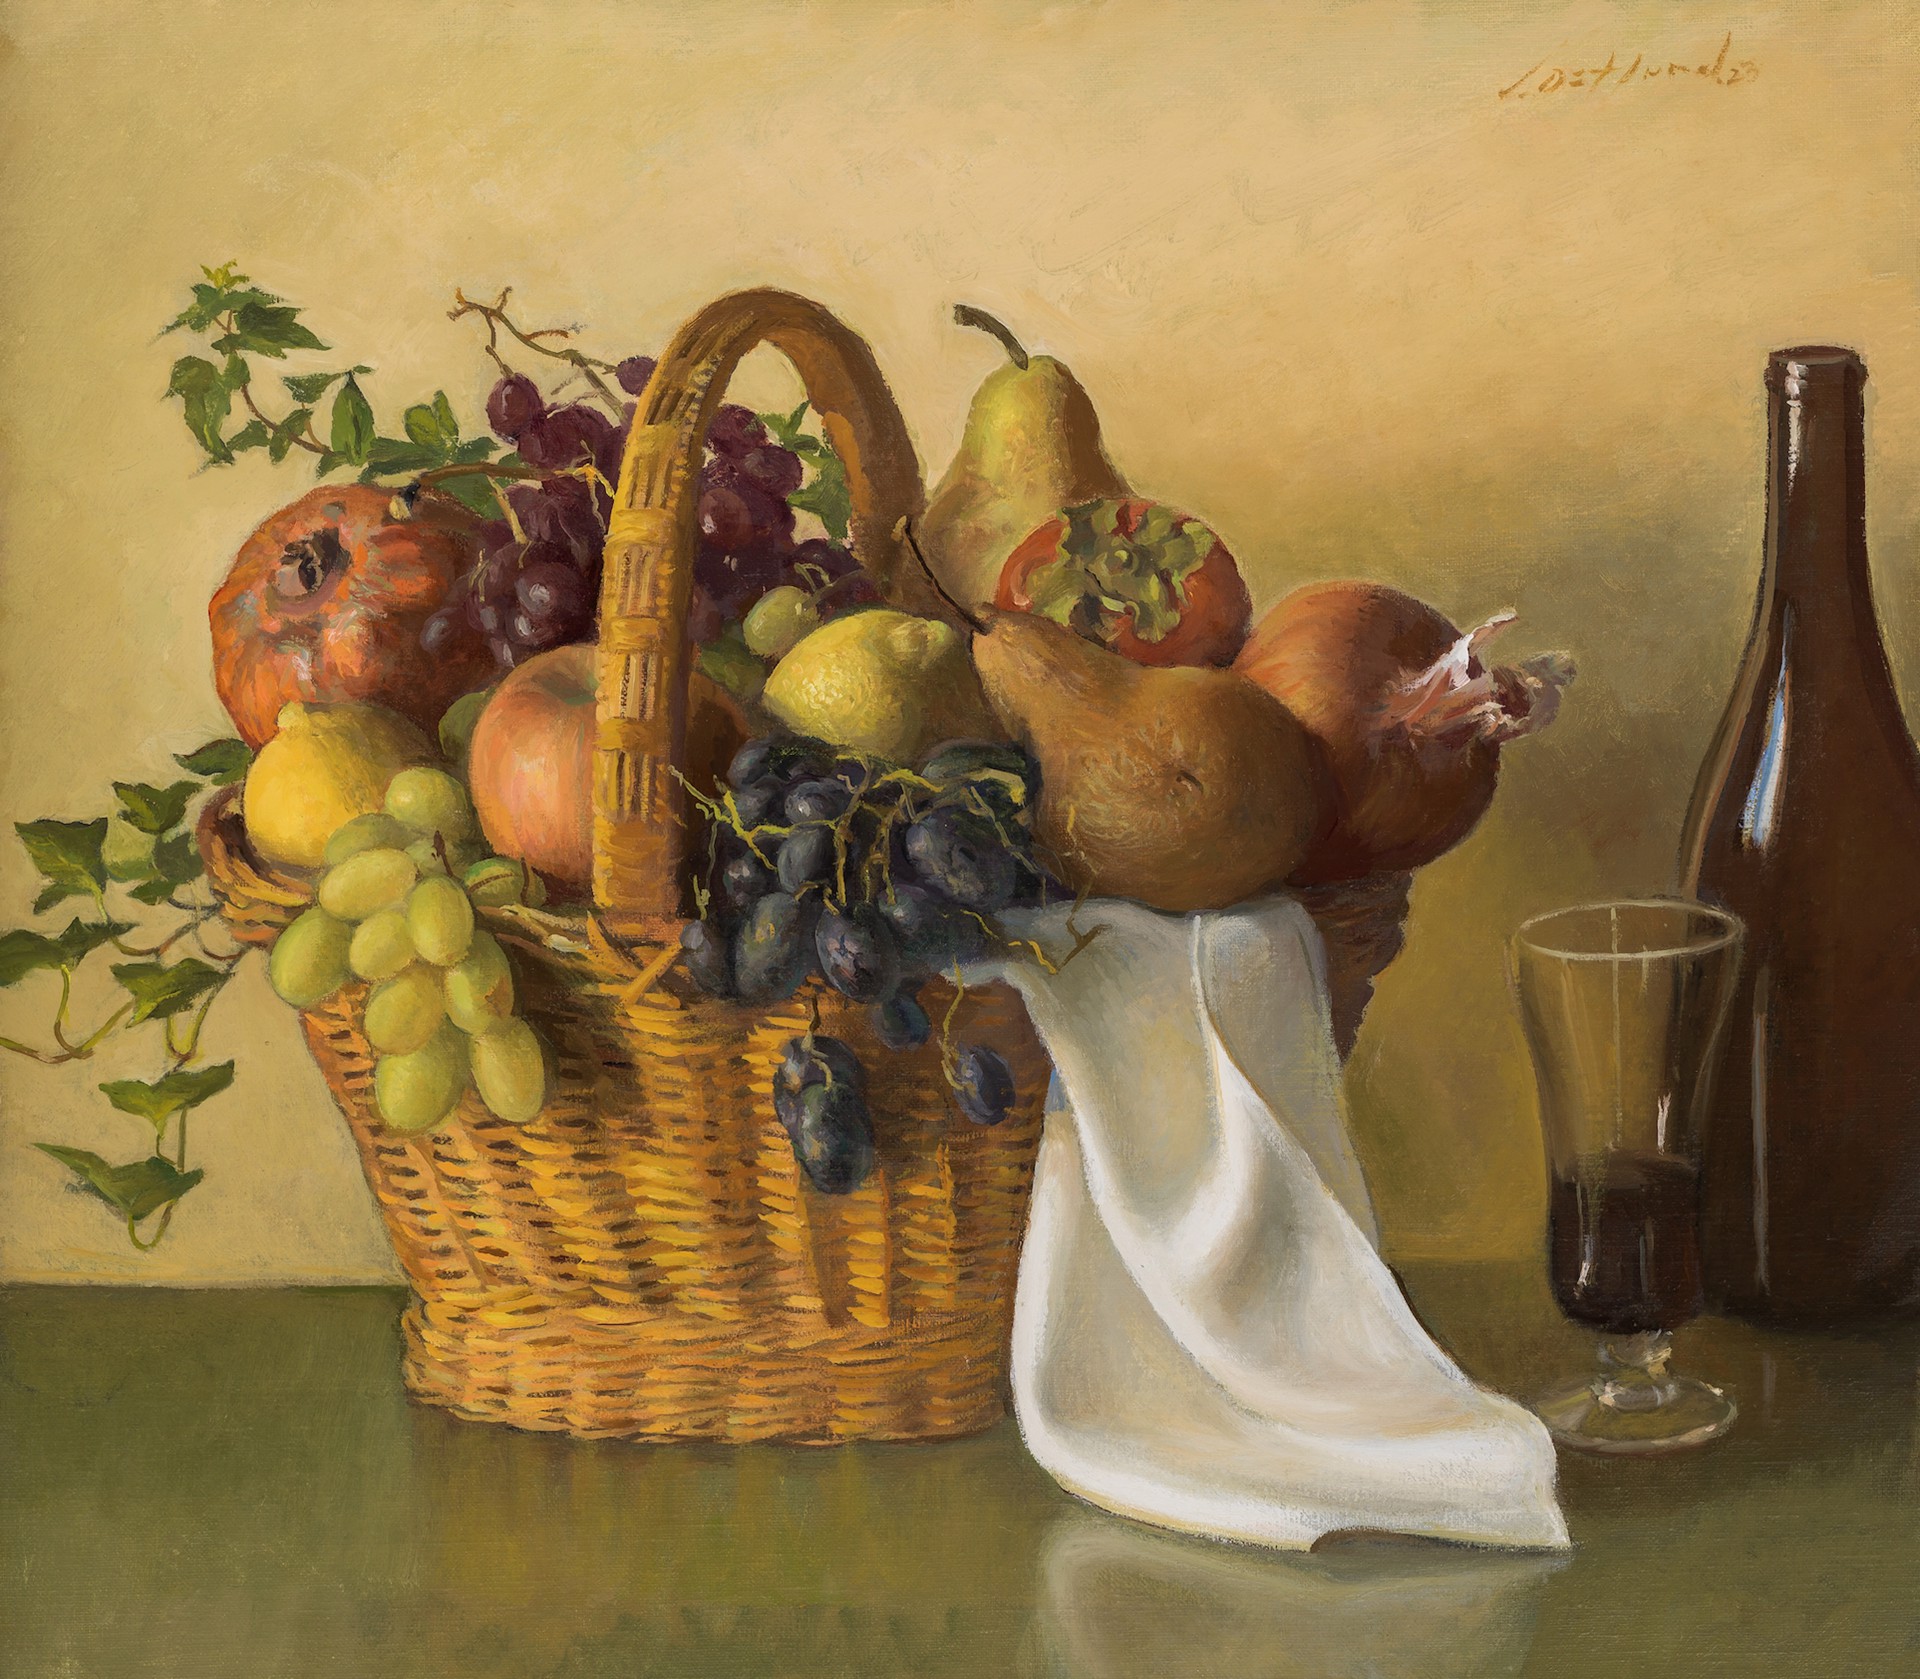 Basket of Fruit by Jim Ostlund